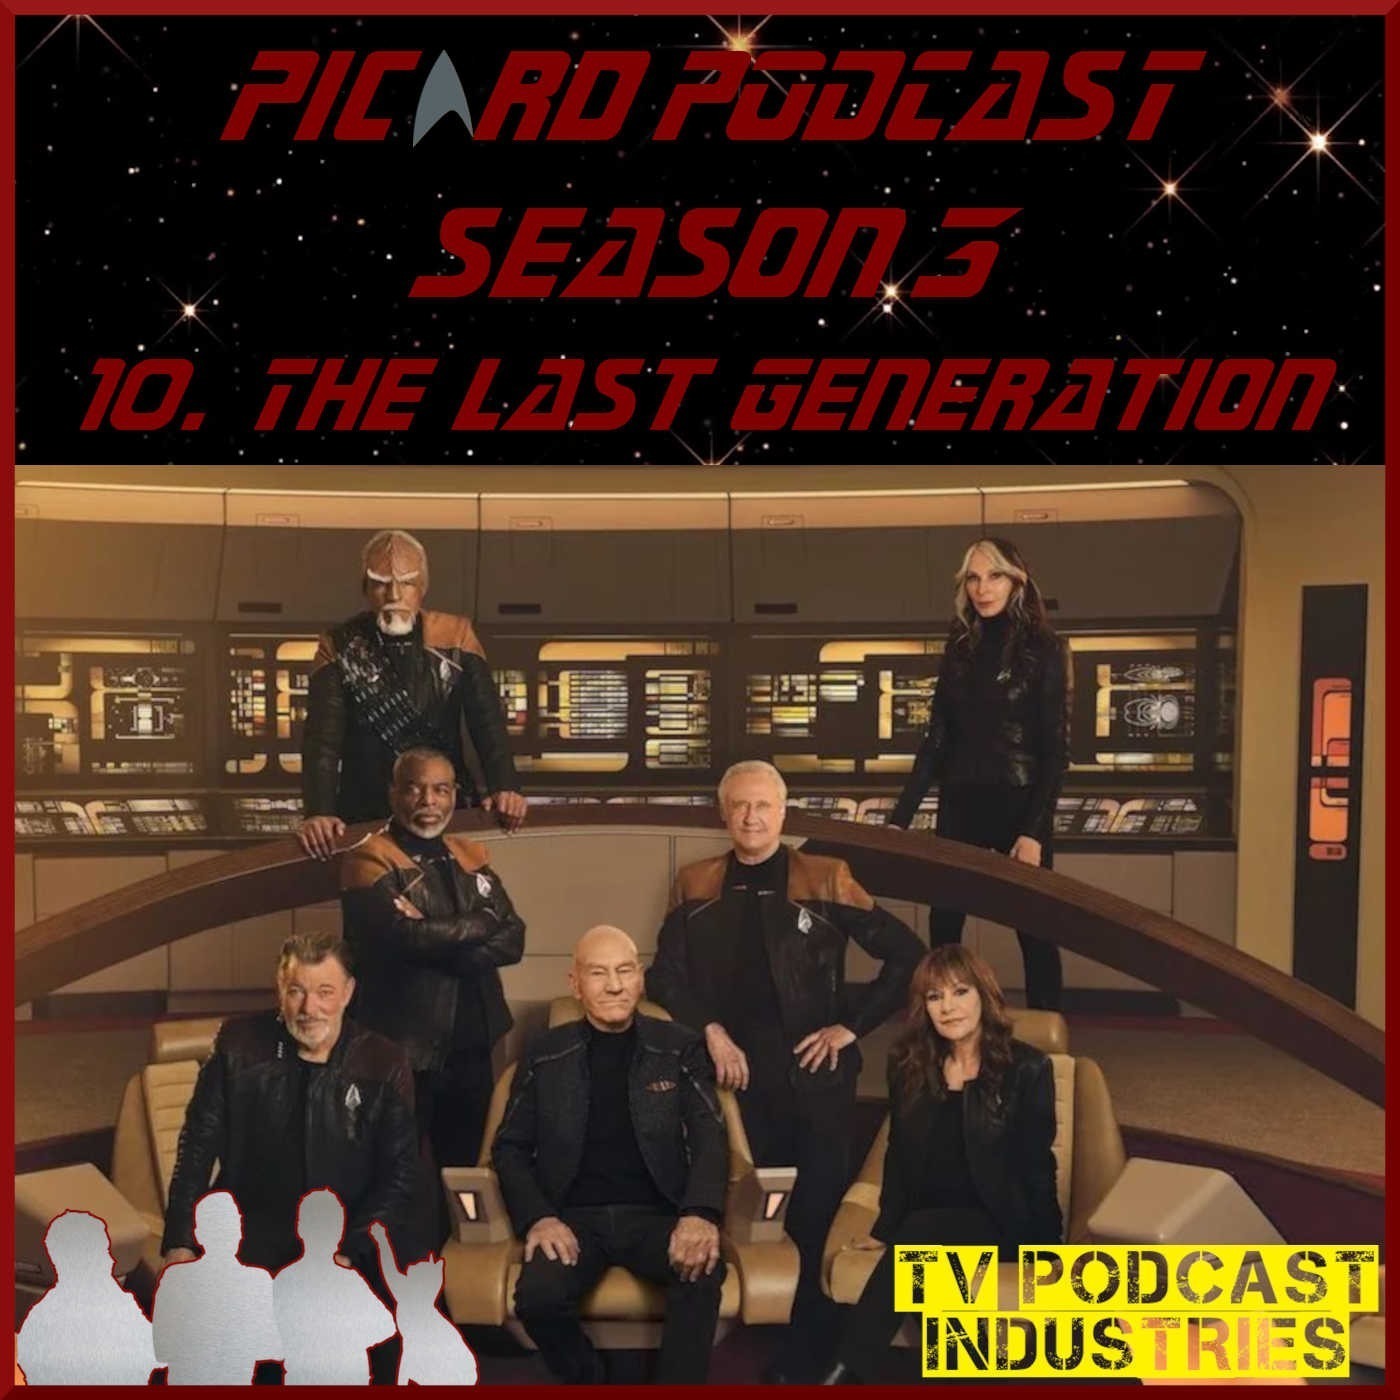 Star Trek Picard Finale 310 ”The Last Generation” review